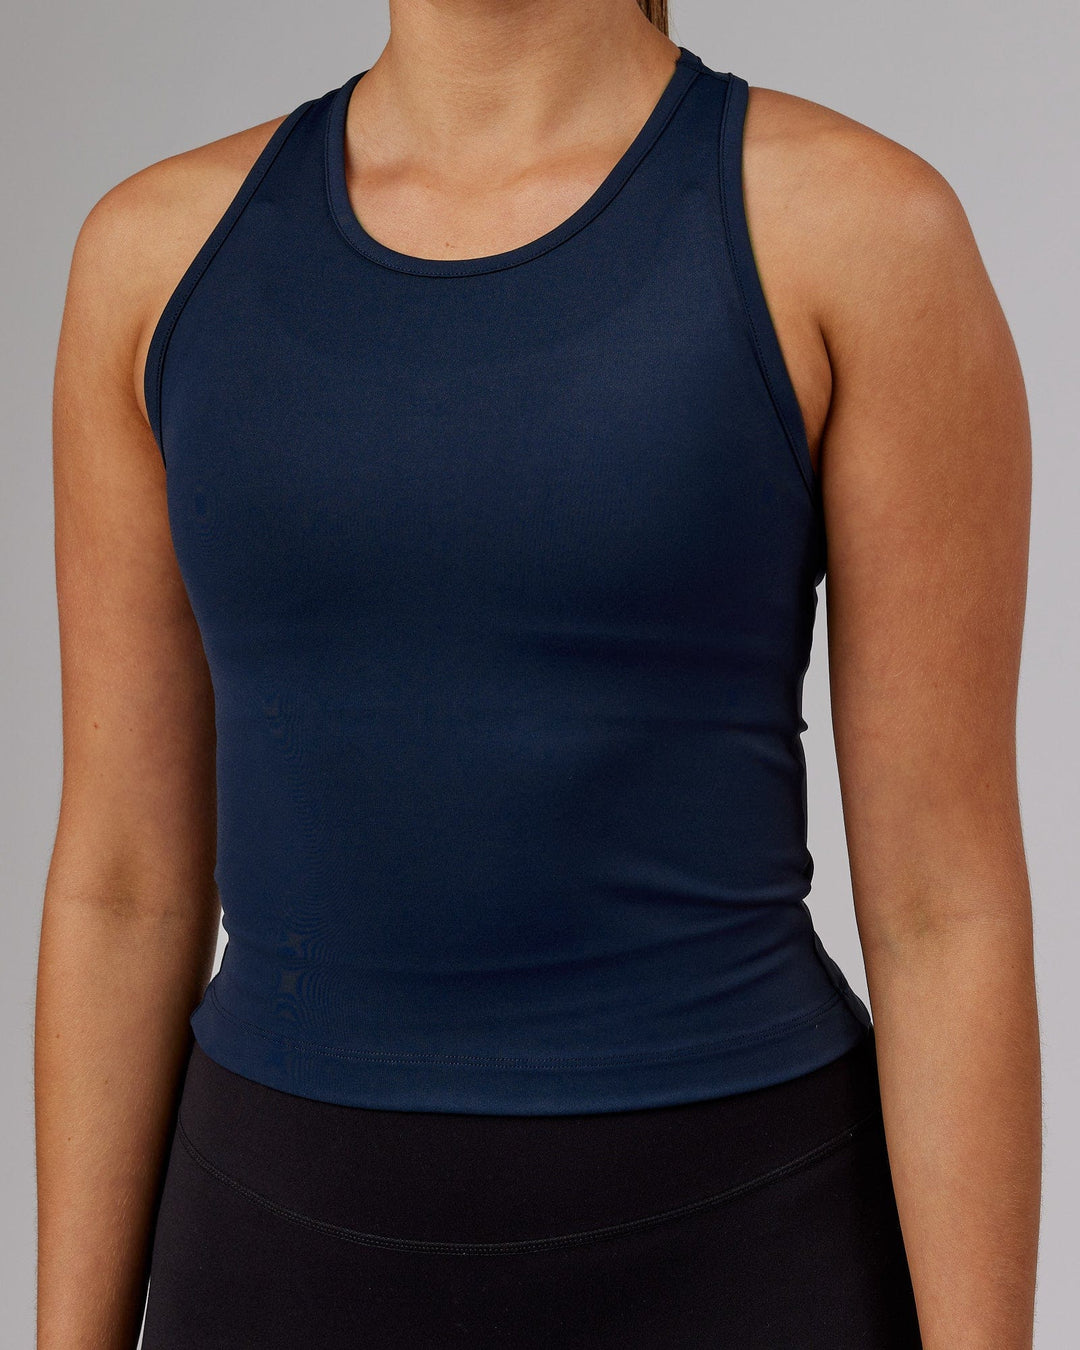 Super Soft Yoga Tank - Navy Blue, Women's Vests